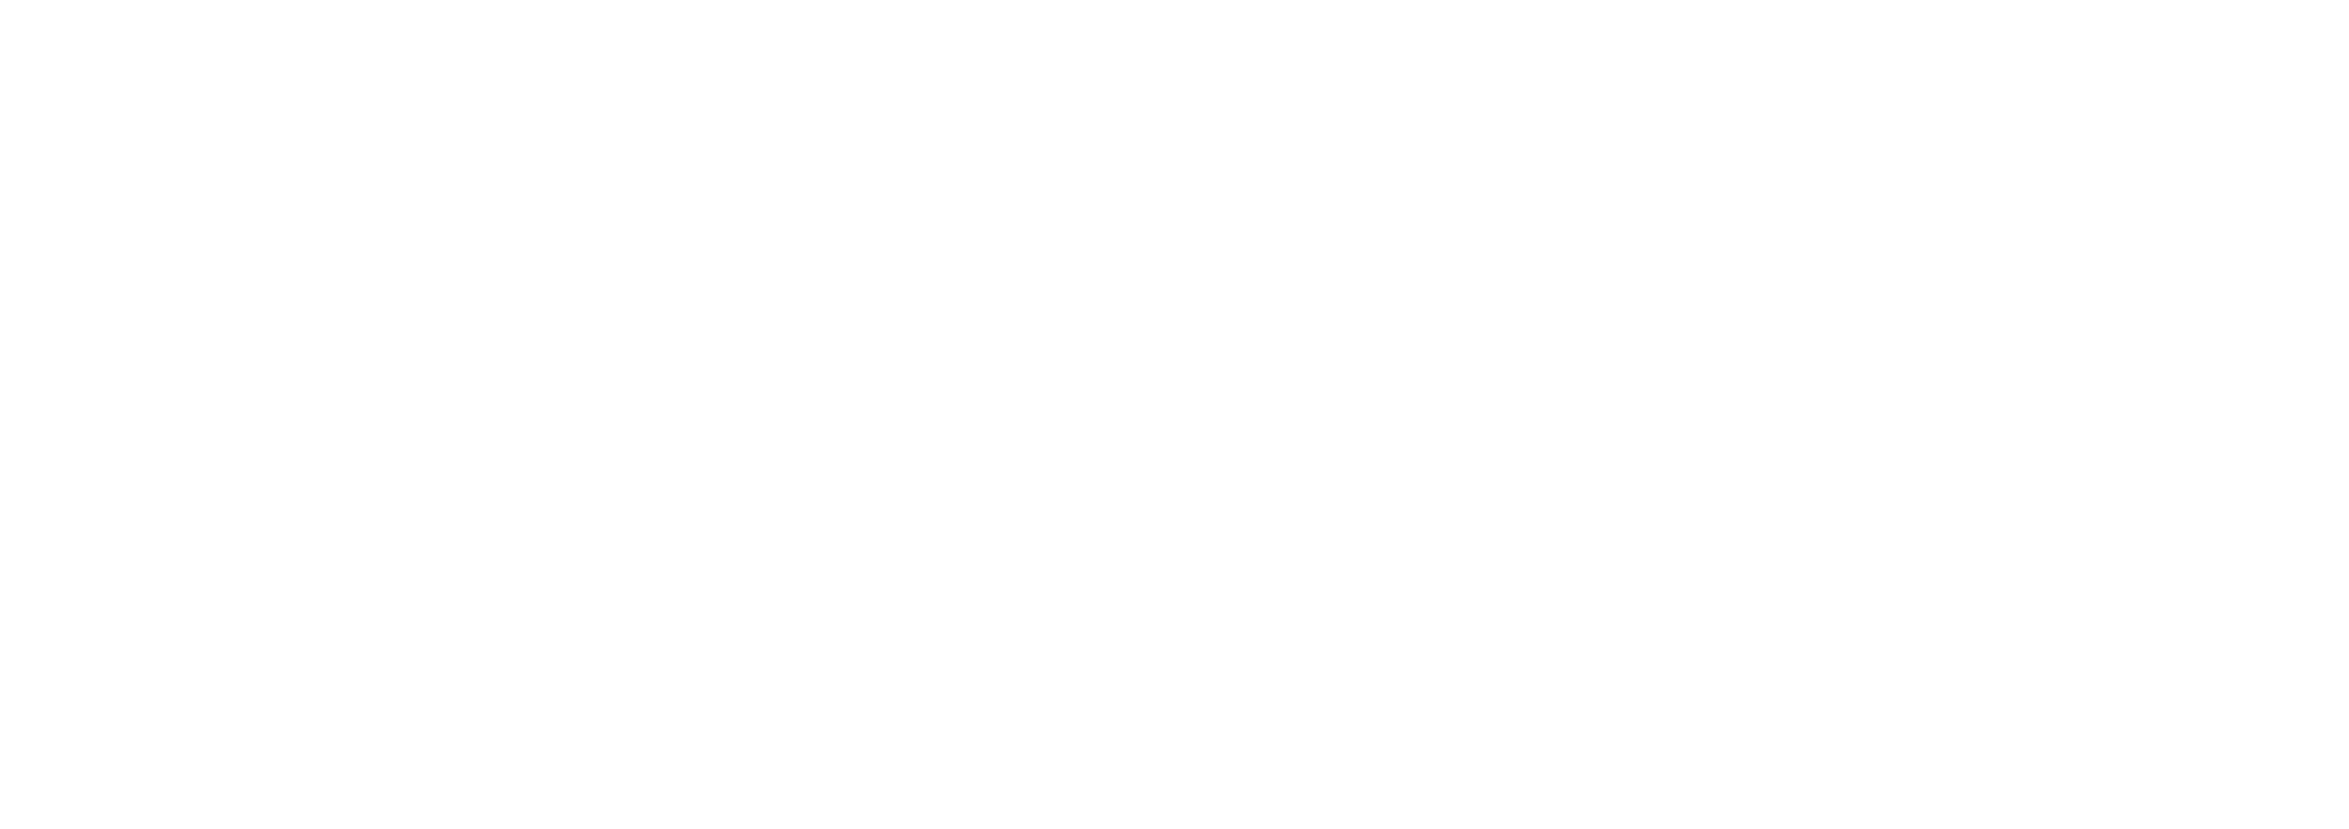 Logo AOC blanco